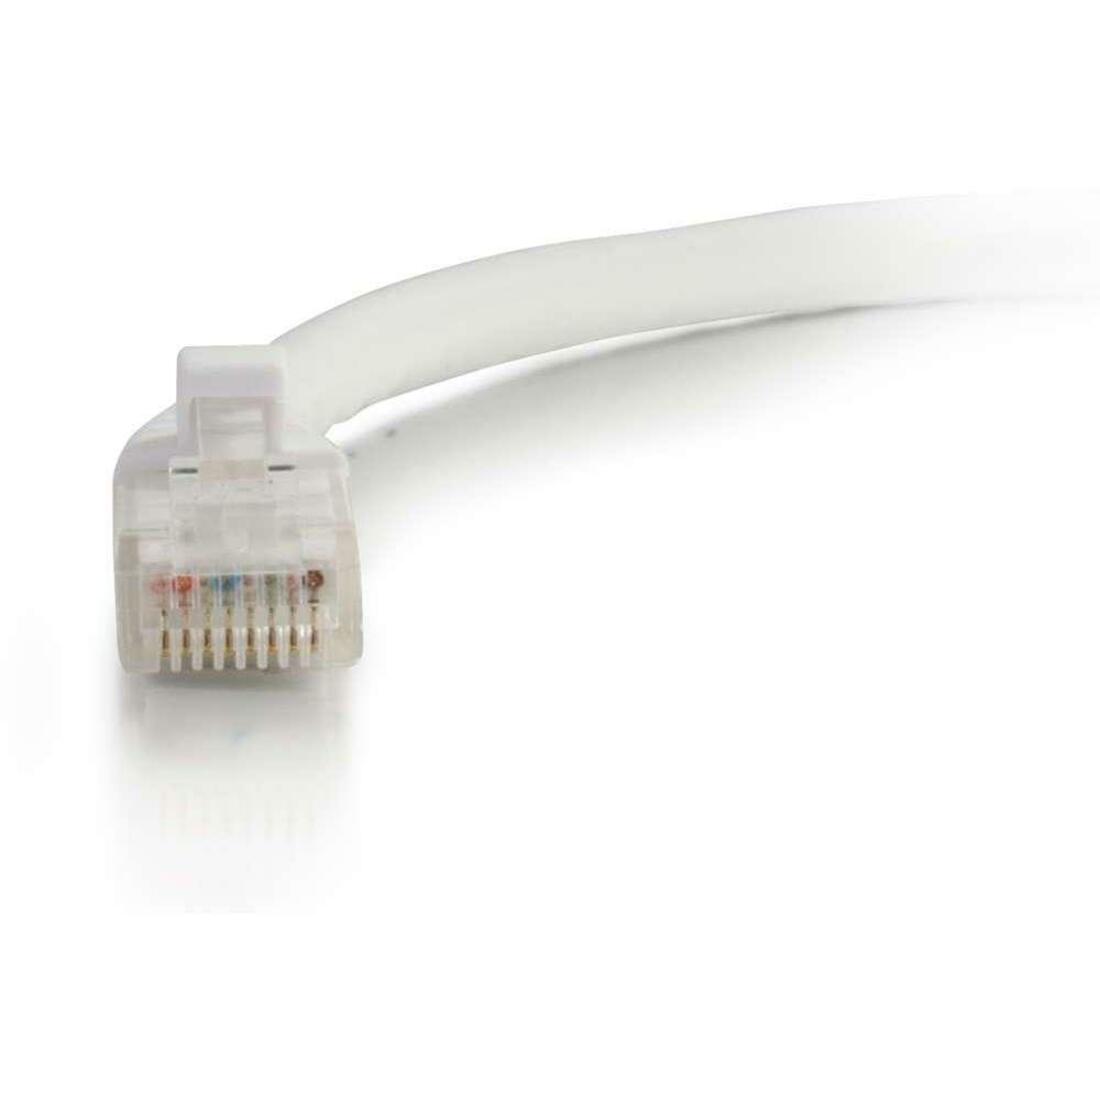 Cavo Ethernet non schermato Cat6 C2G 27163 10ft bianco garanzia a vita.